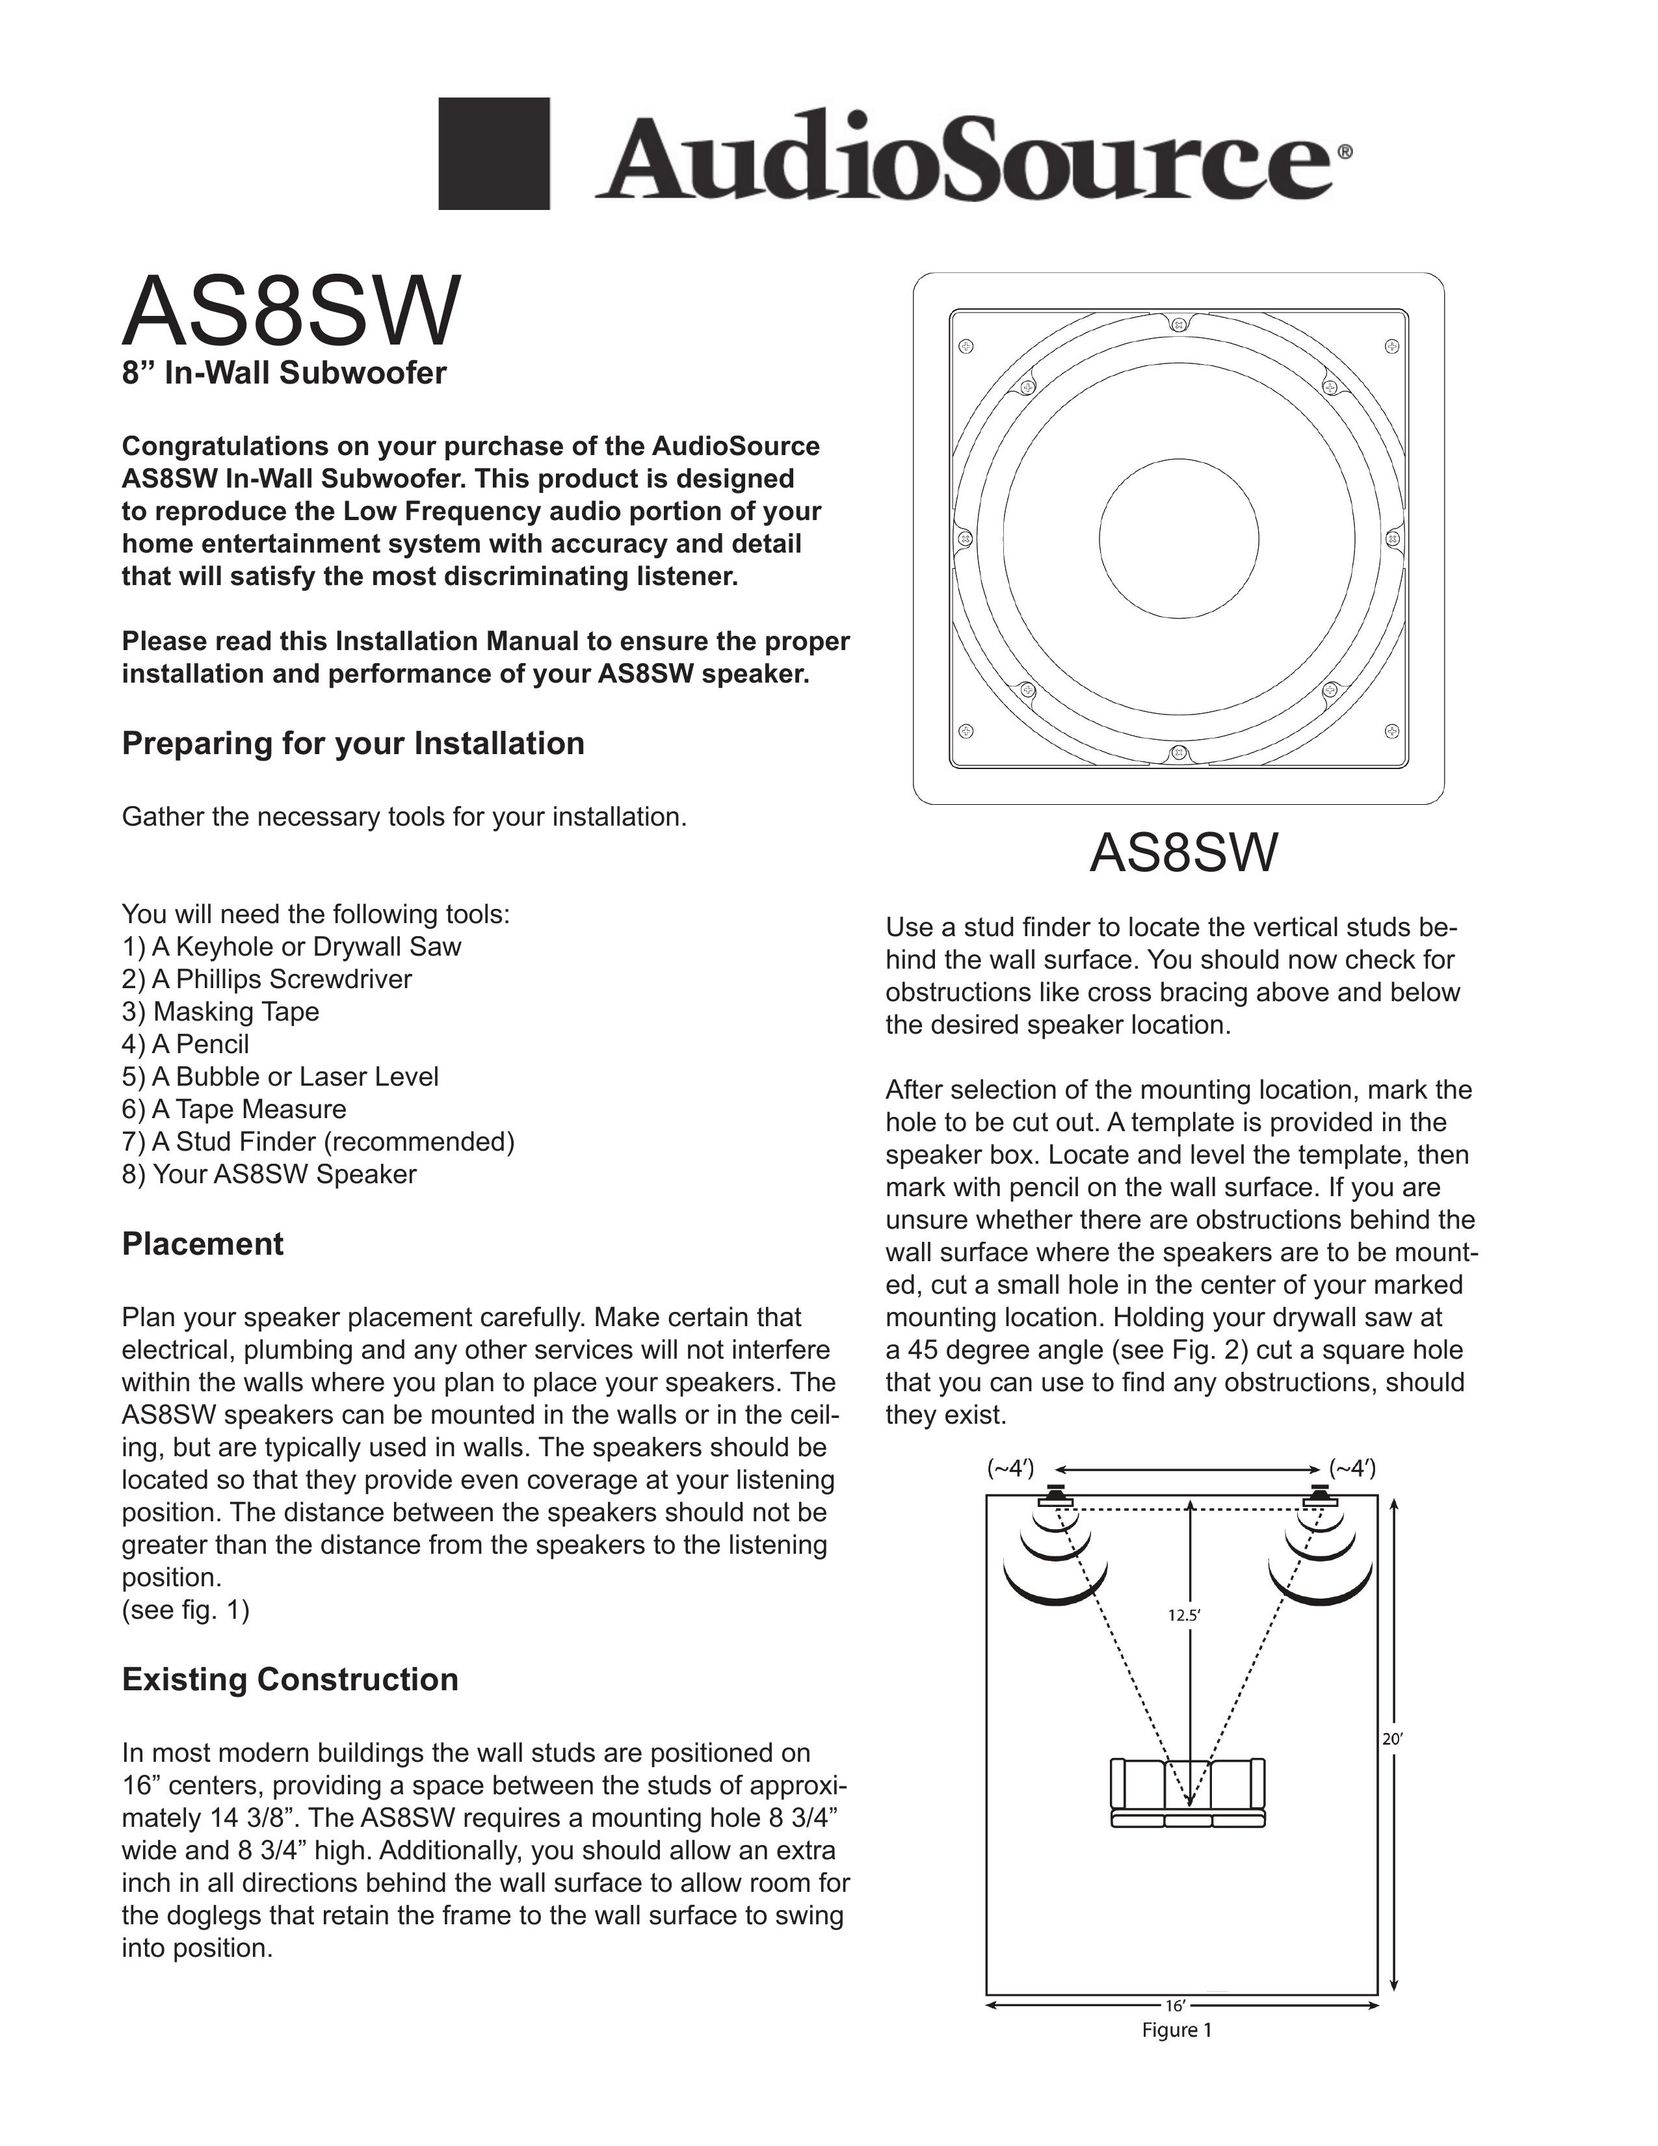 AudioSource AS8SW Speaker User Manual